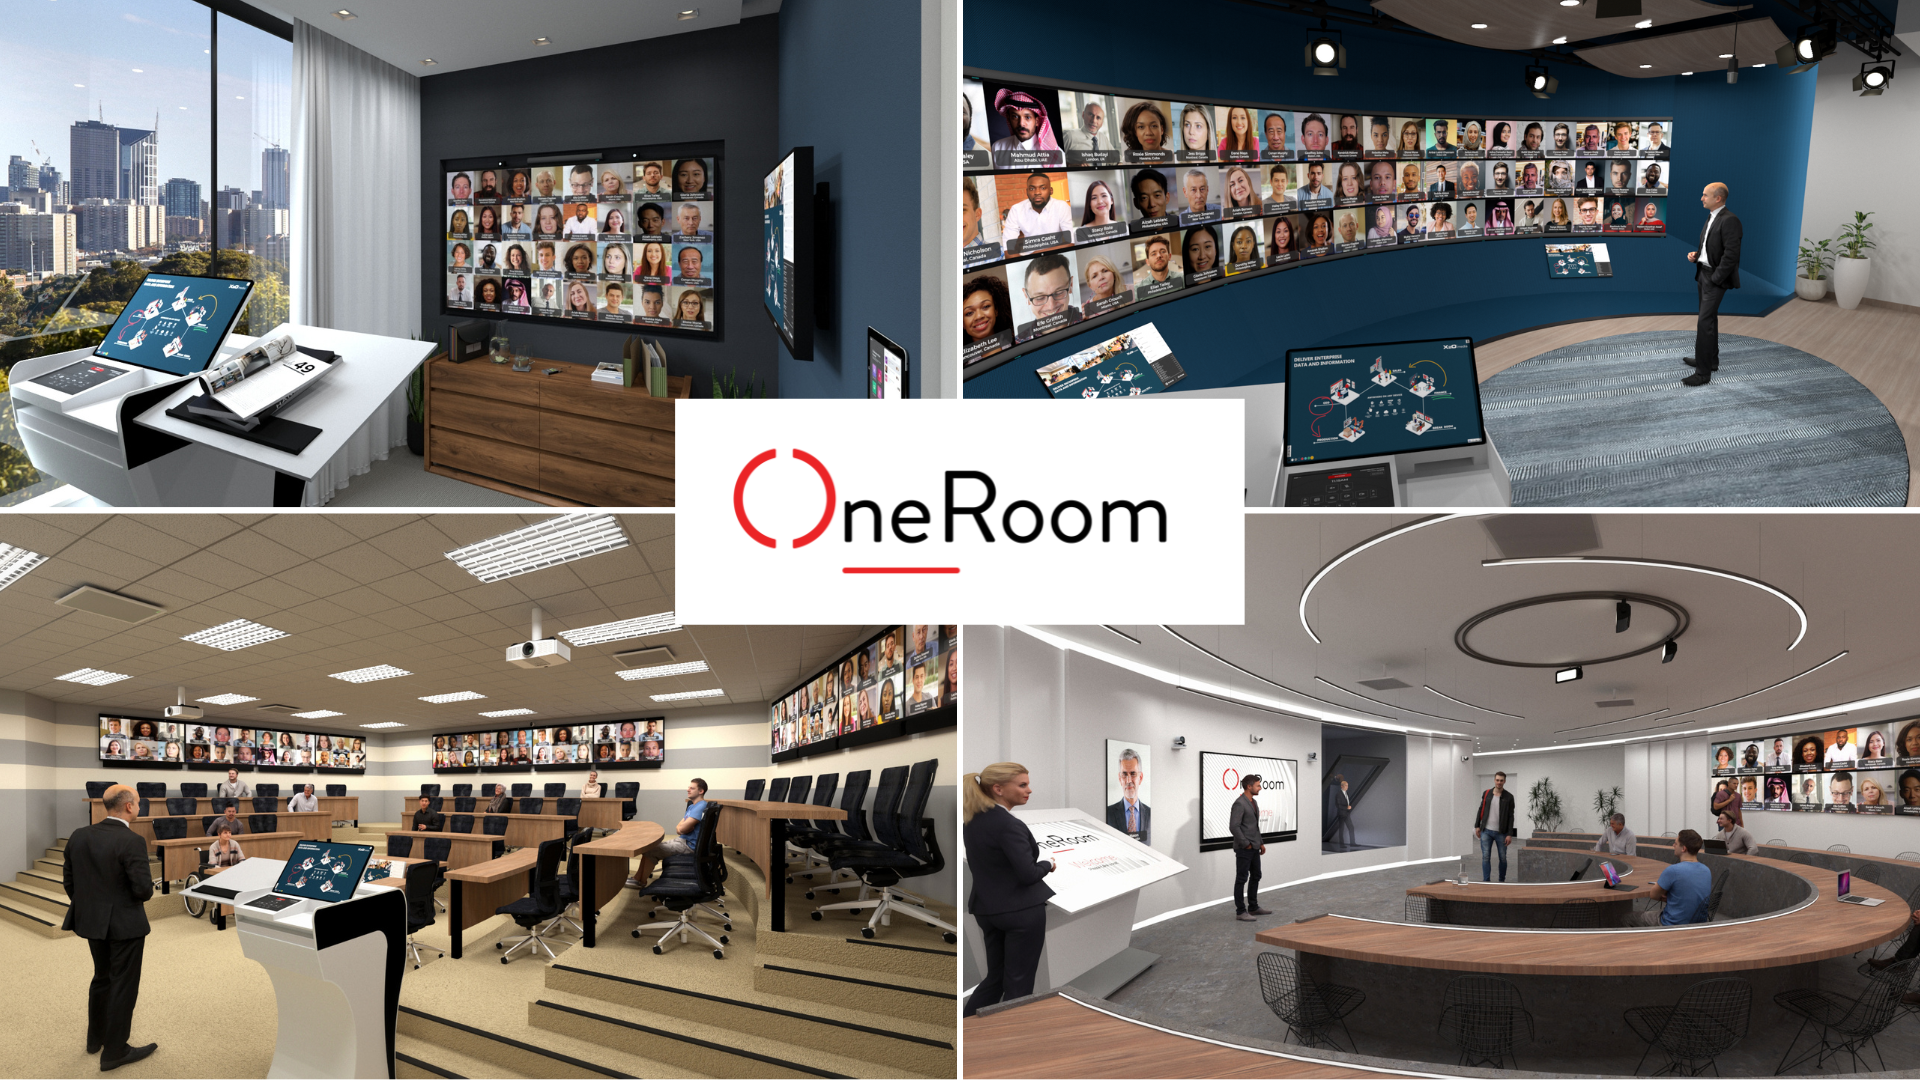 x2o-oneroom-classroom-image-4